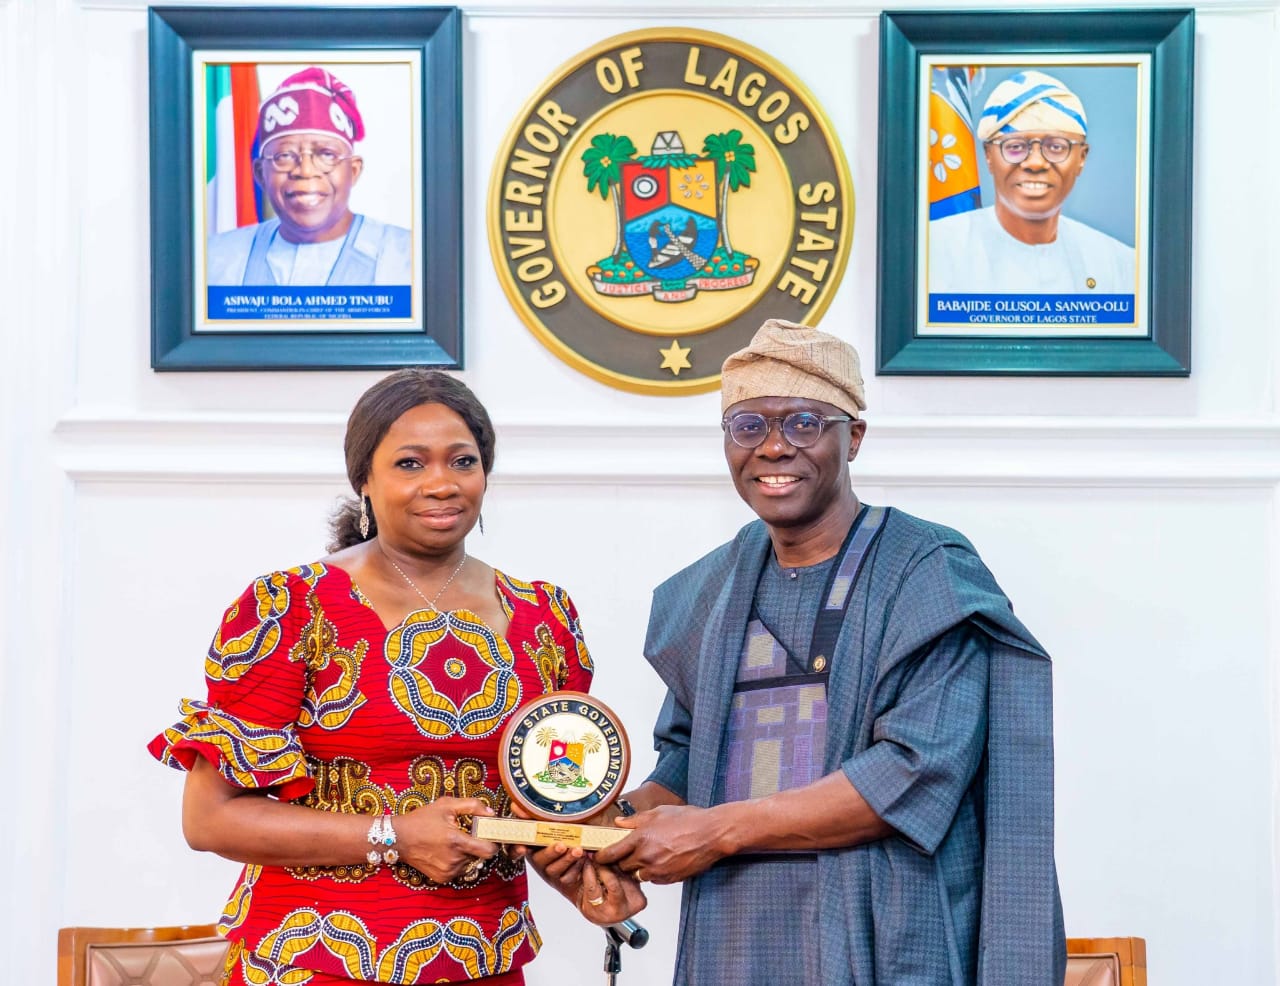 Governor Sanwo-olu establishes fully-fledged diaspora office in Lagos